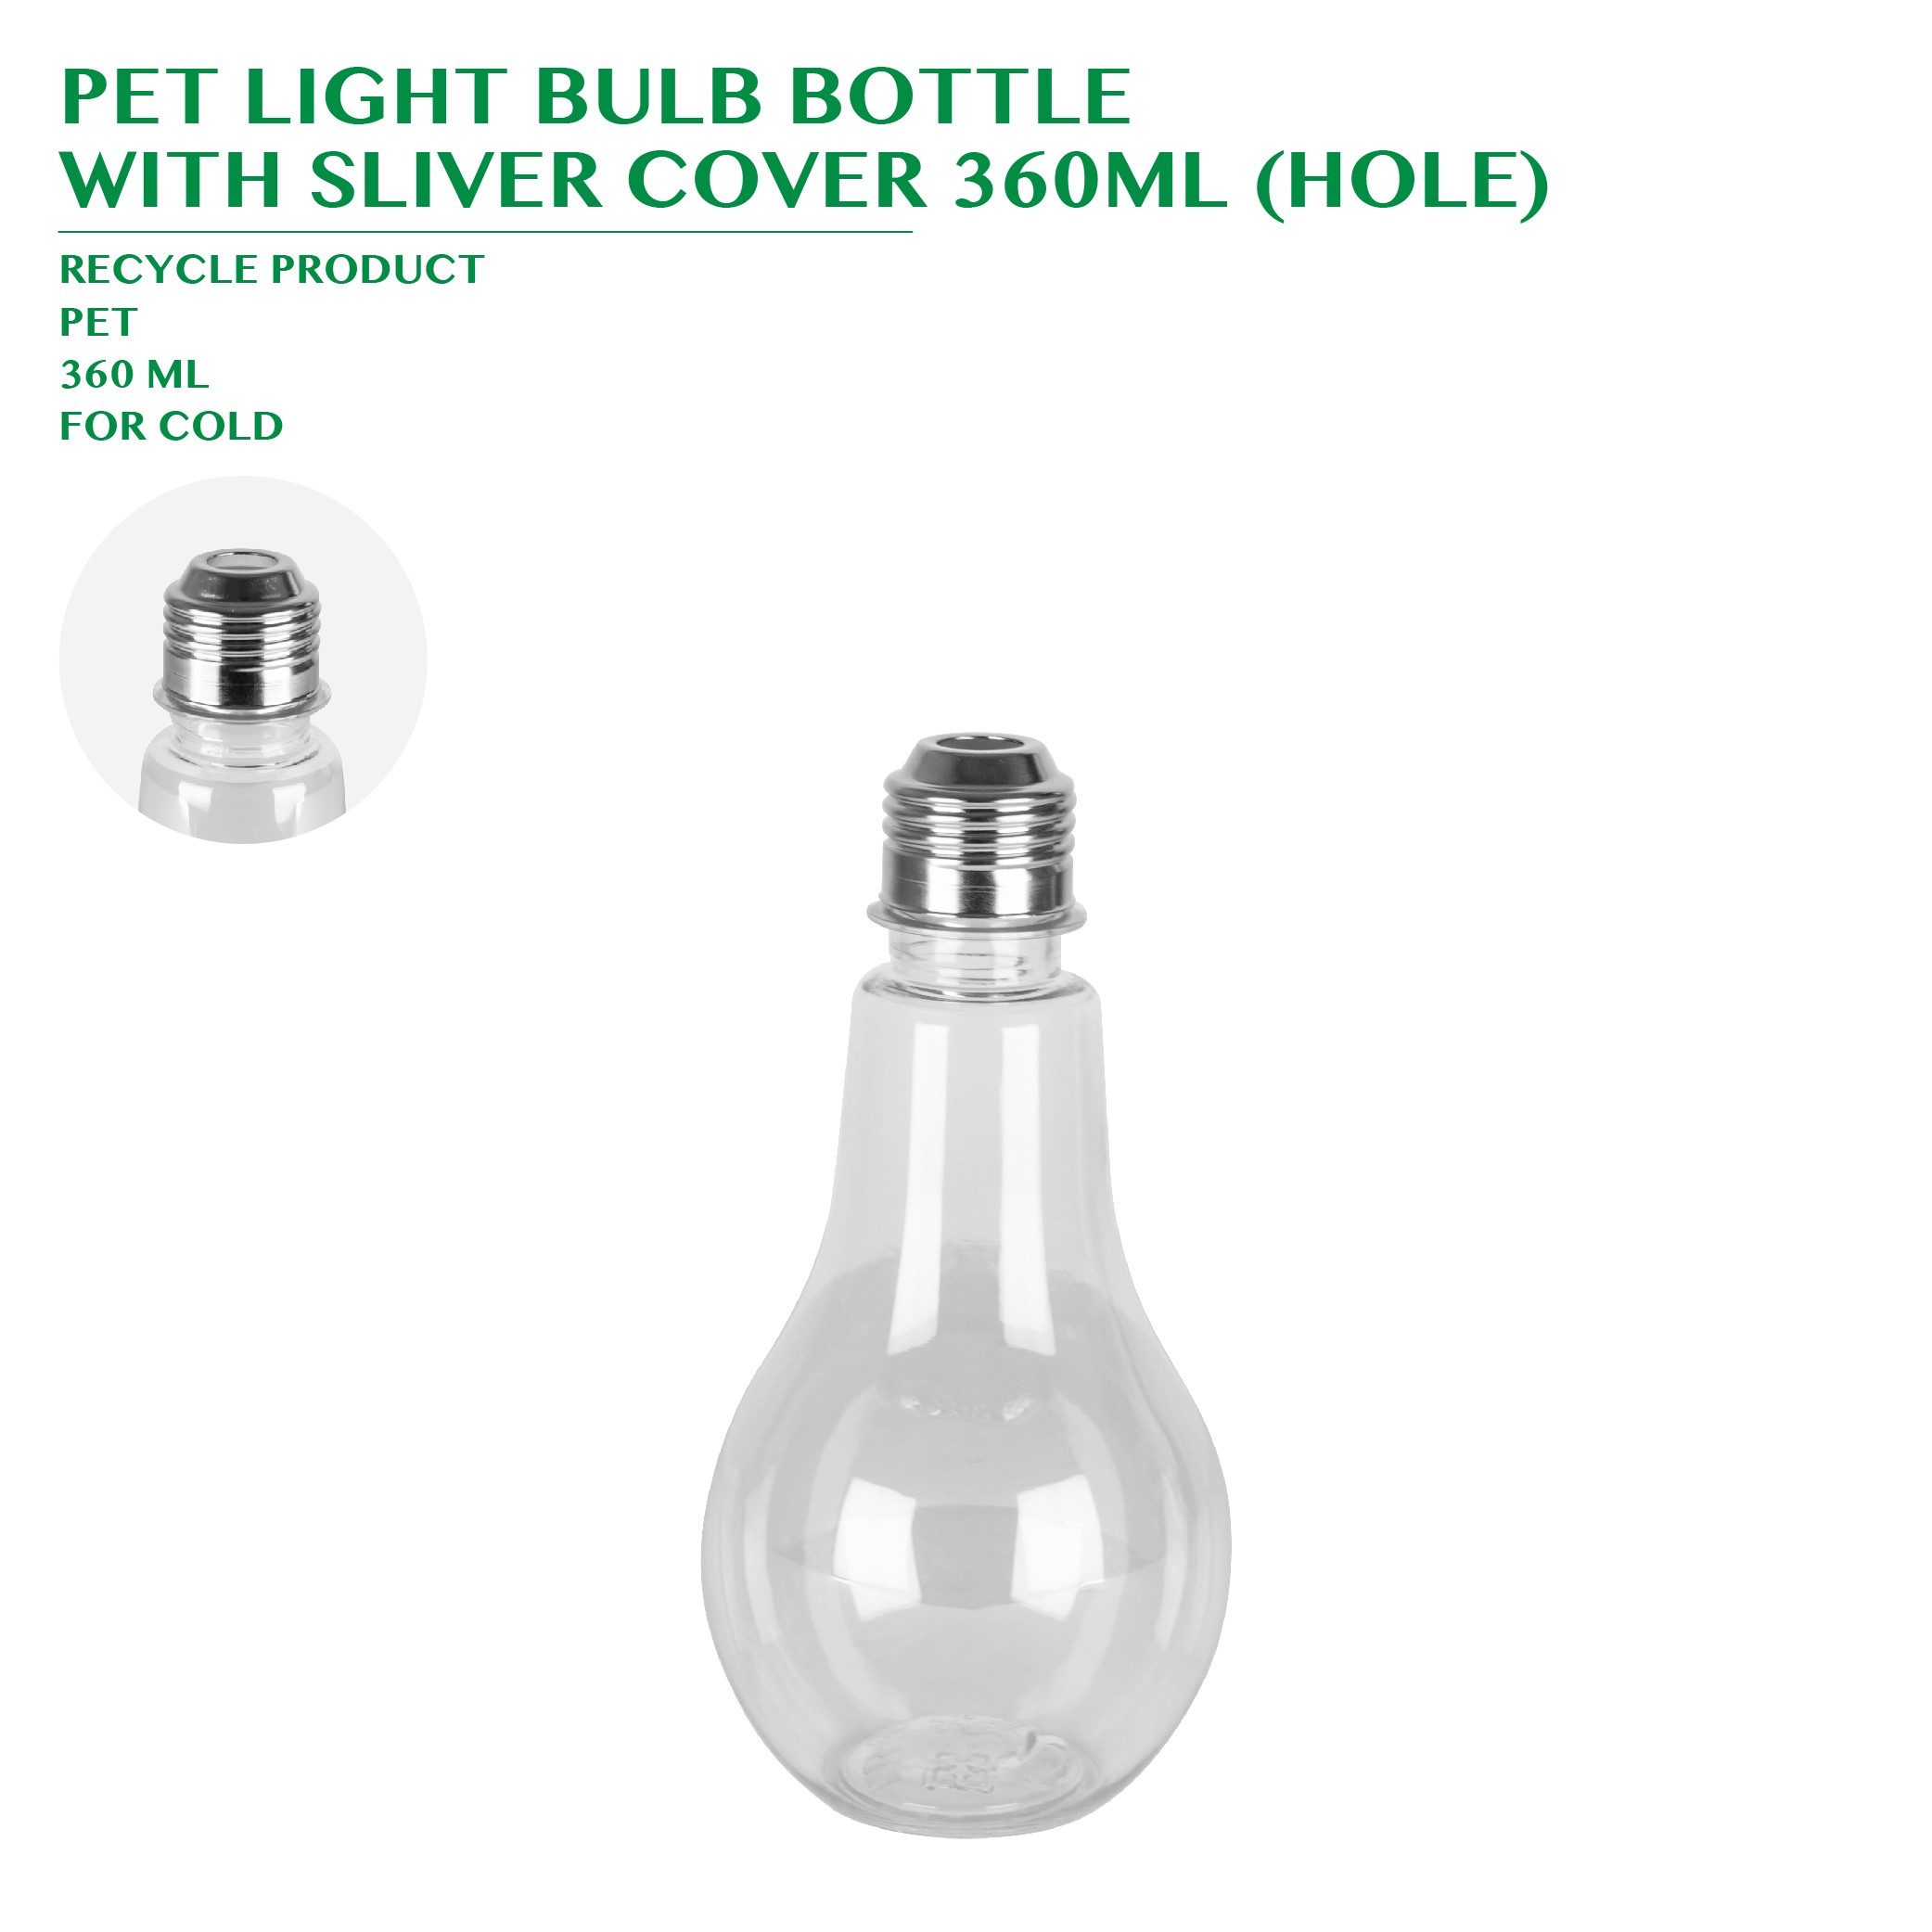 PRE-ORDER PET LIGHT BULB BOTTLE  WITH SLIVER COVER 360ML (HOLE)